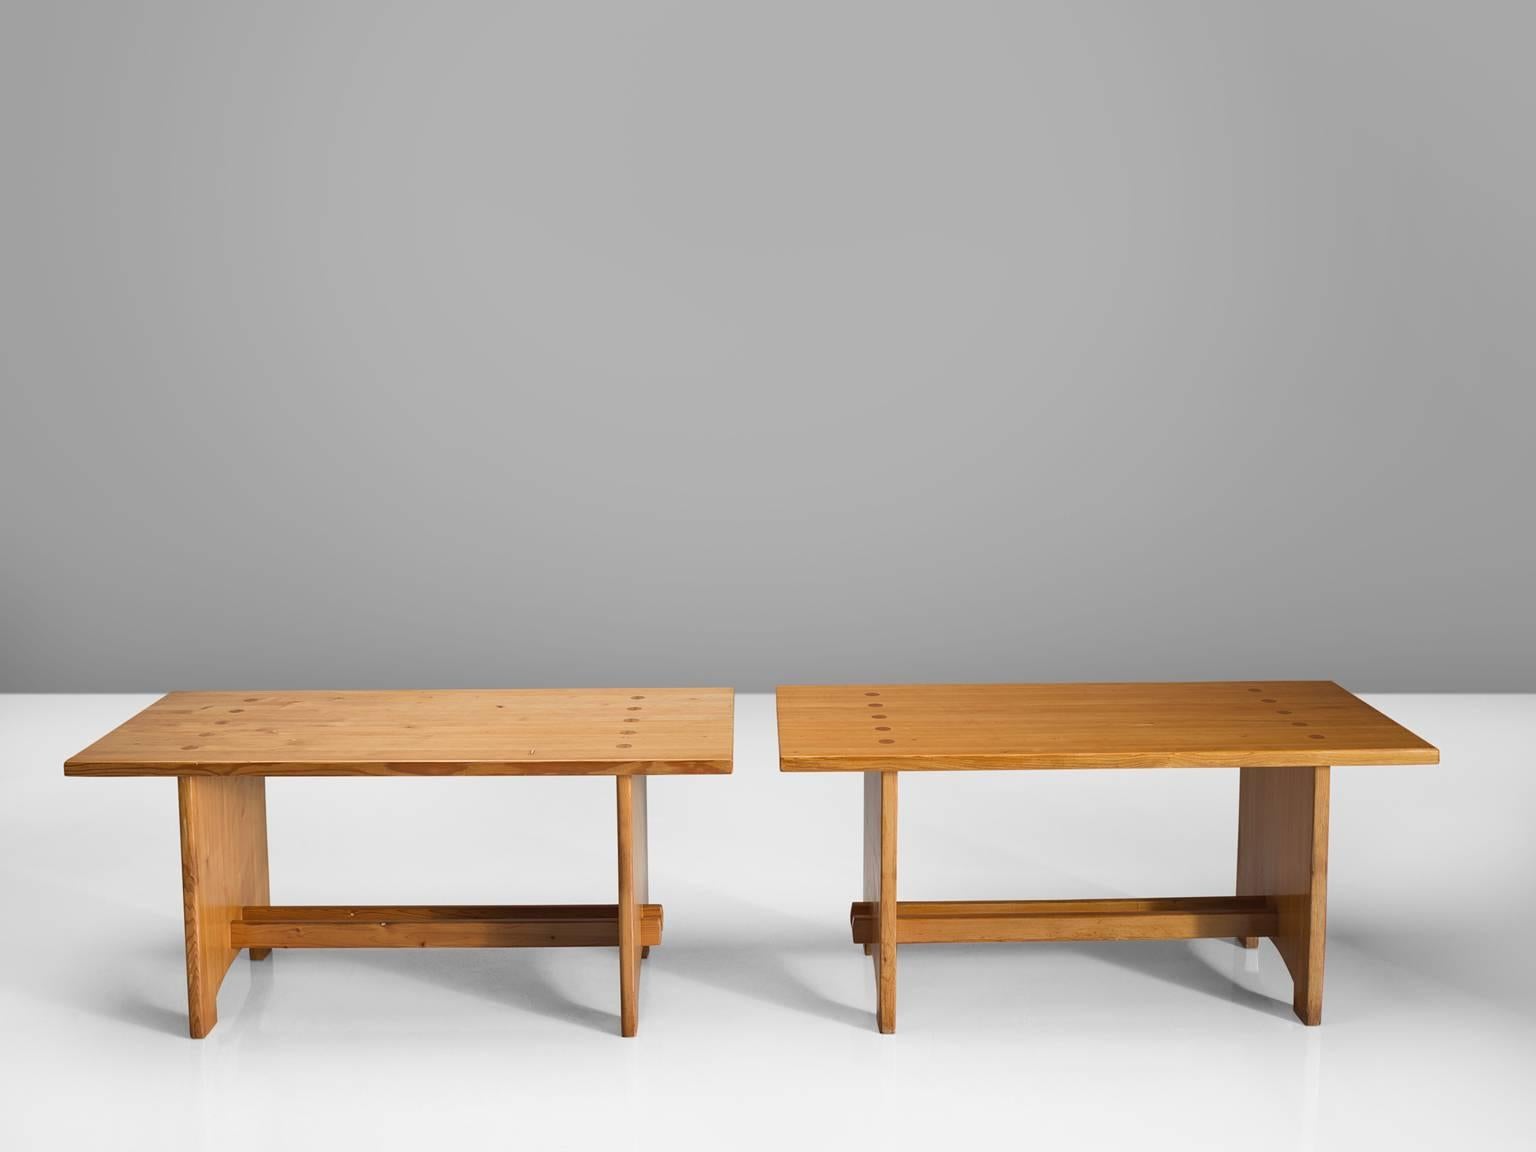 Scandinavian Modern Jacob Kielland-Brandt Dining Tables in Solid Pine